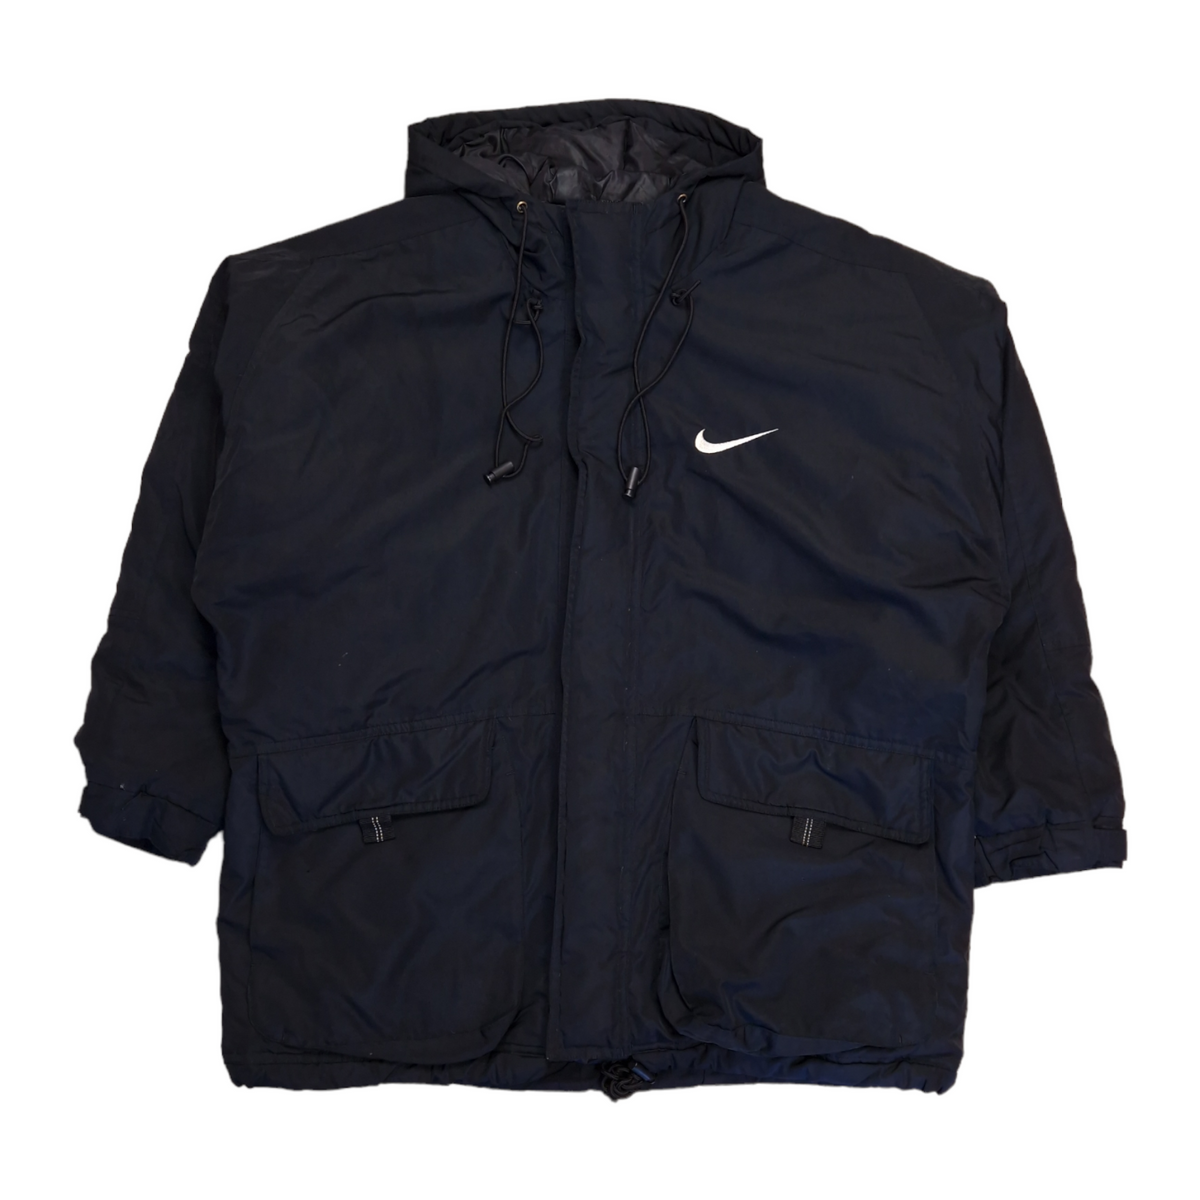 90's Nike Puffer Jacket - Size XL